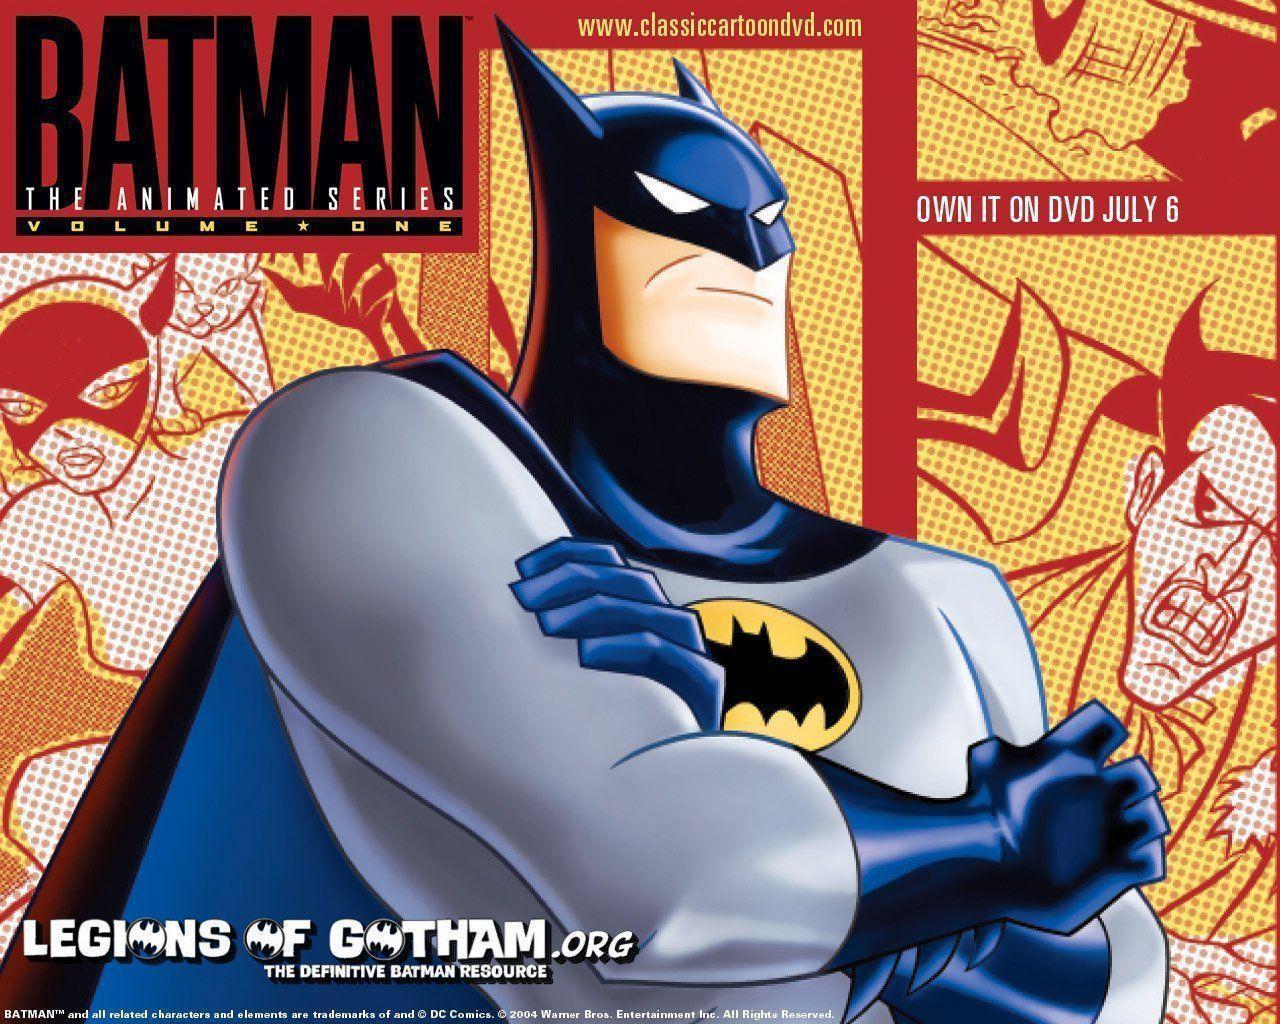 Batman: The Animated Series Wallpaper Downloads cartoon